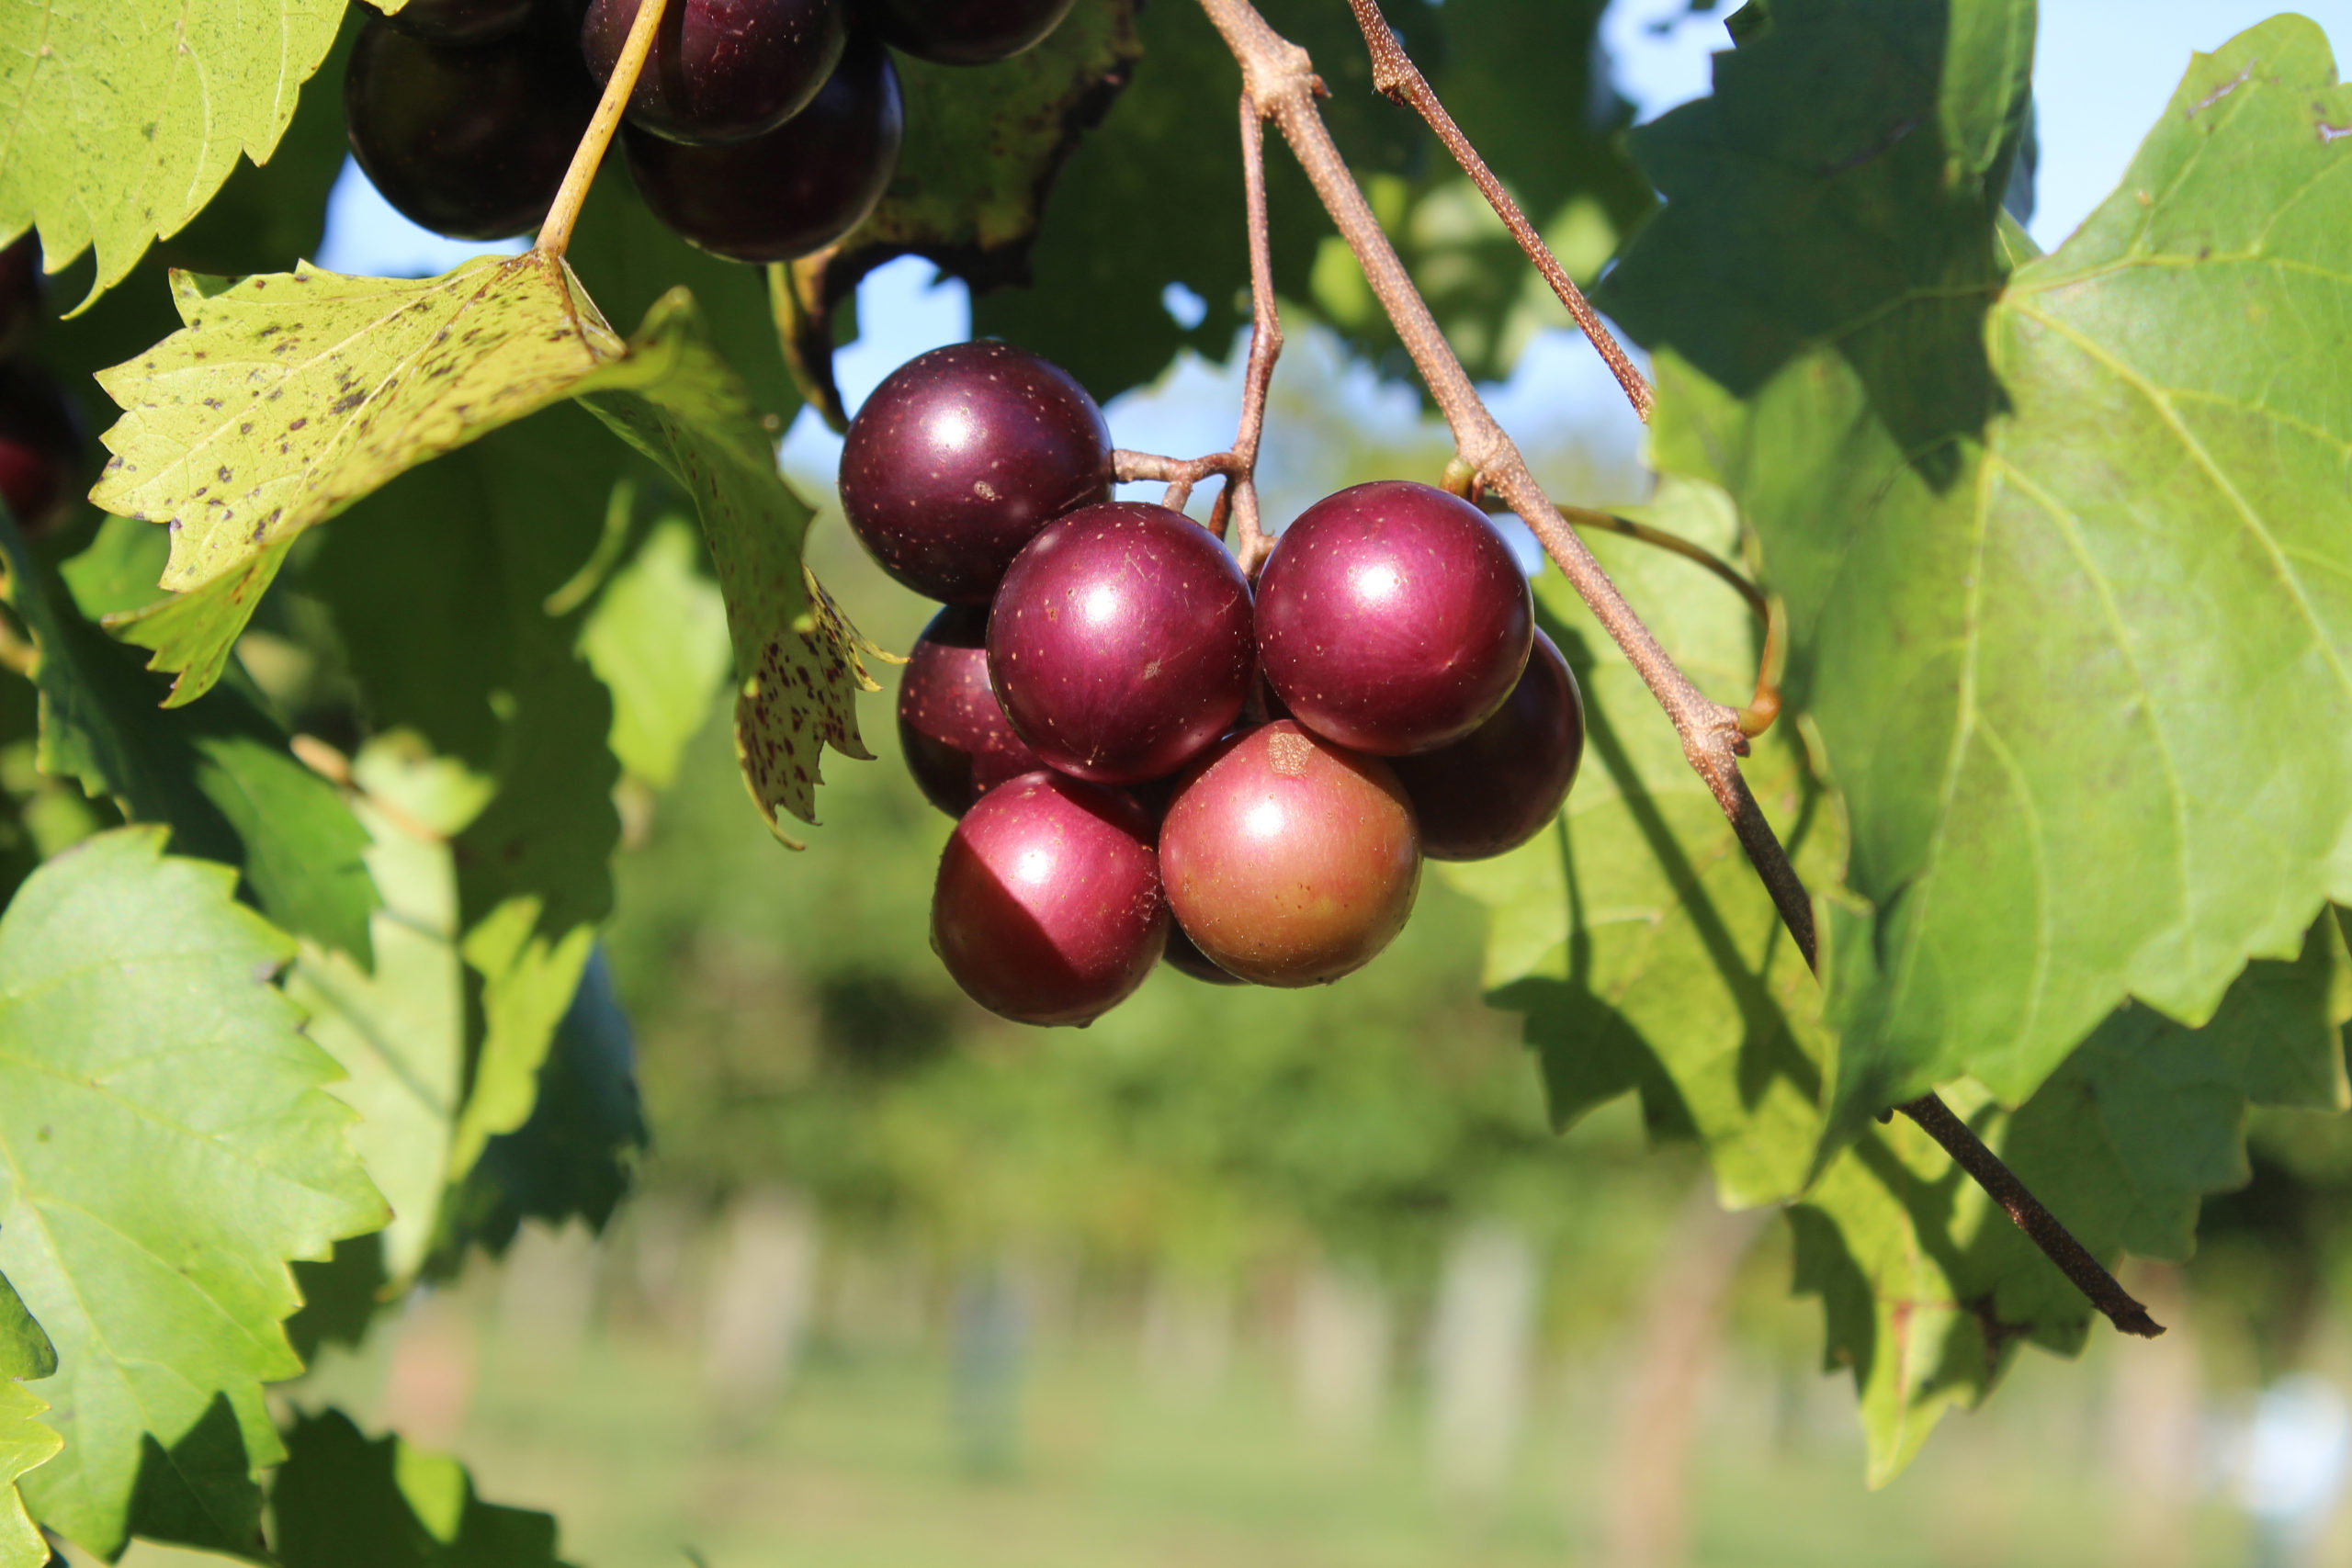 Muscadine wine grape cluster ripening on the vine